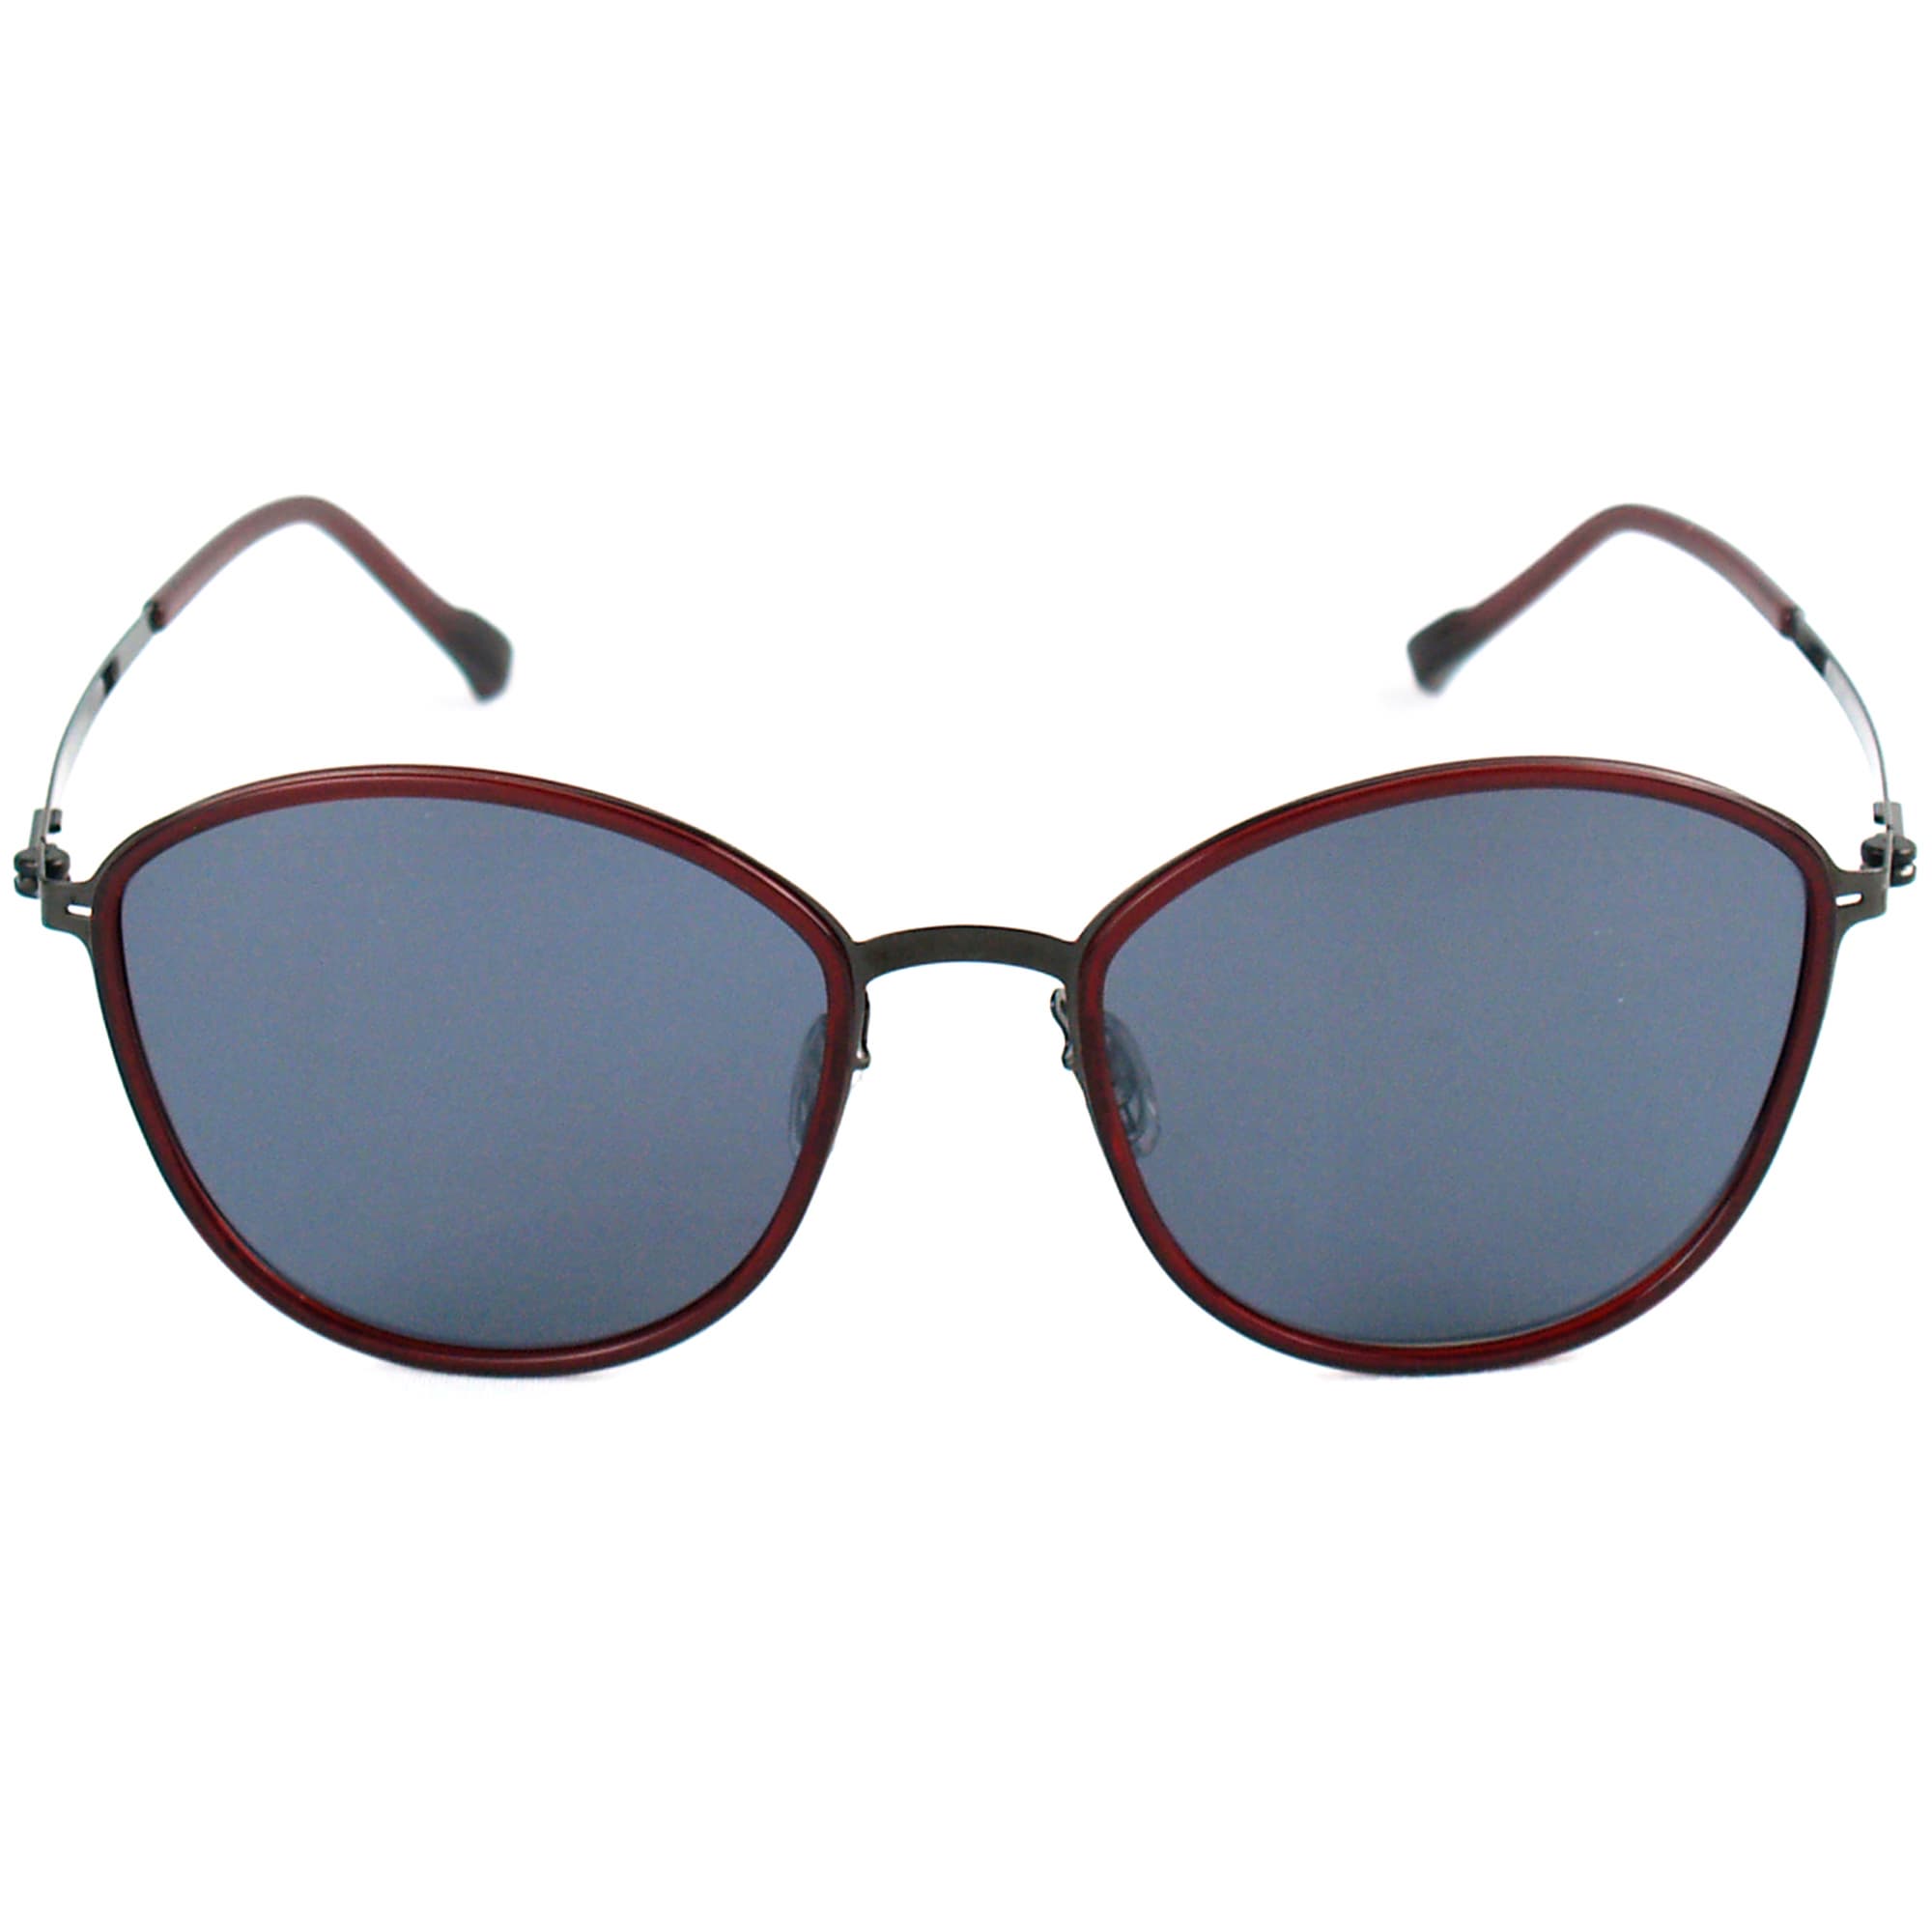 MetaphorII  Acetate _ Thin Stainless Steel  Frame Sunglasses